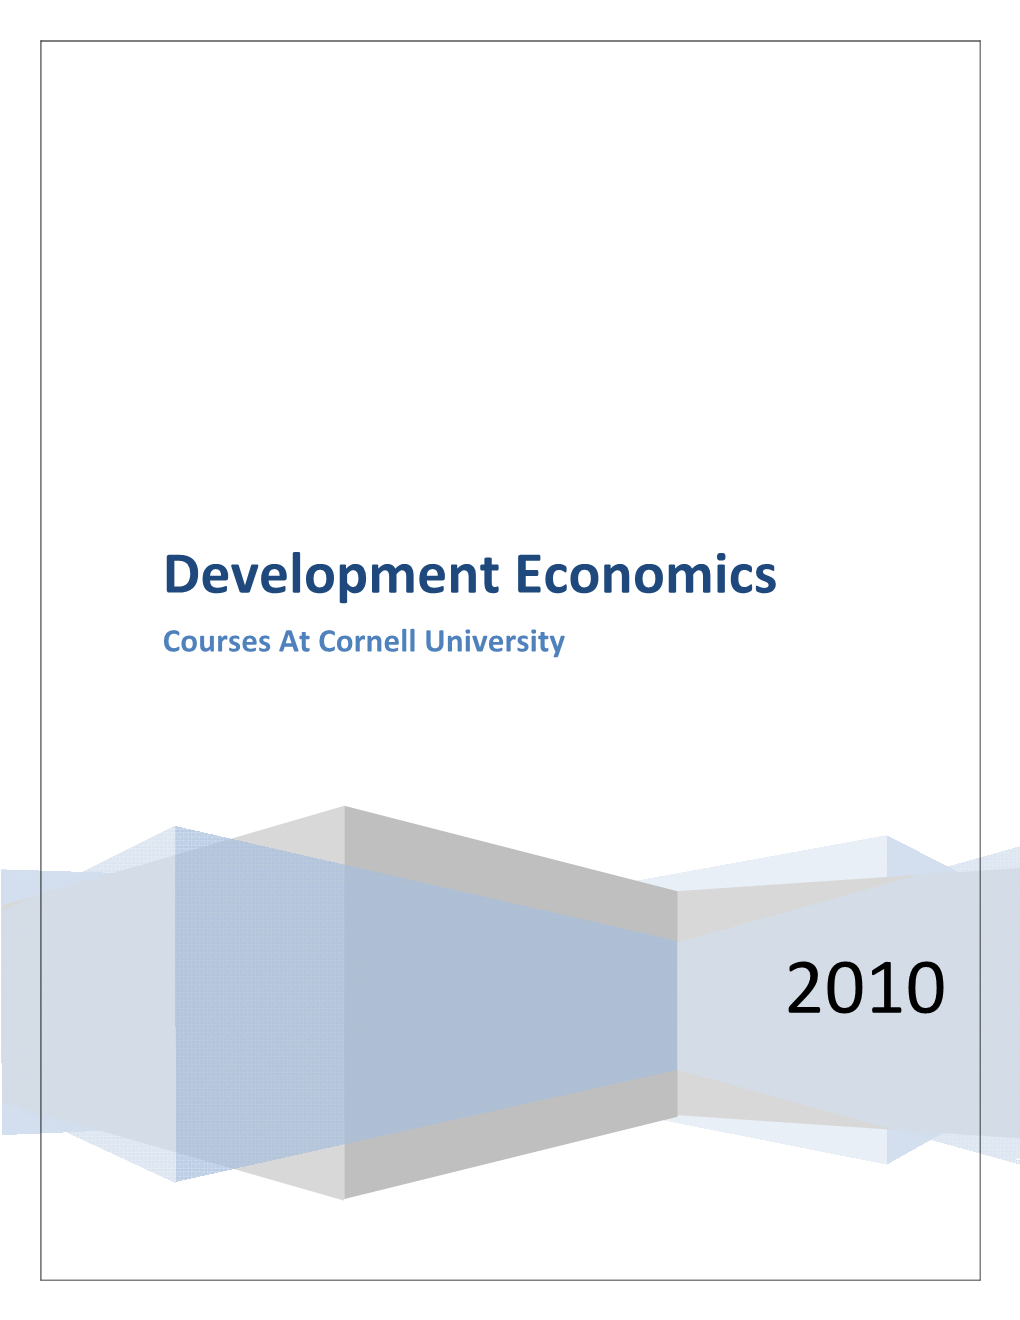 Development Economics Courses at Cornell University